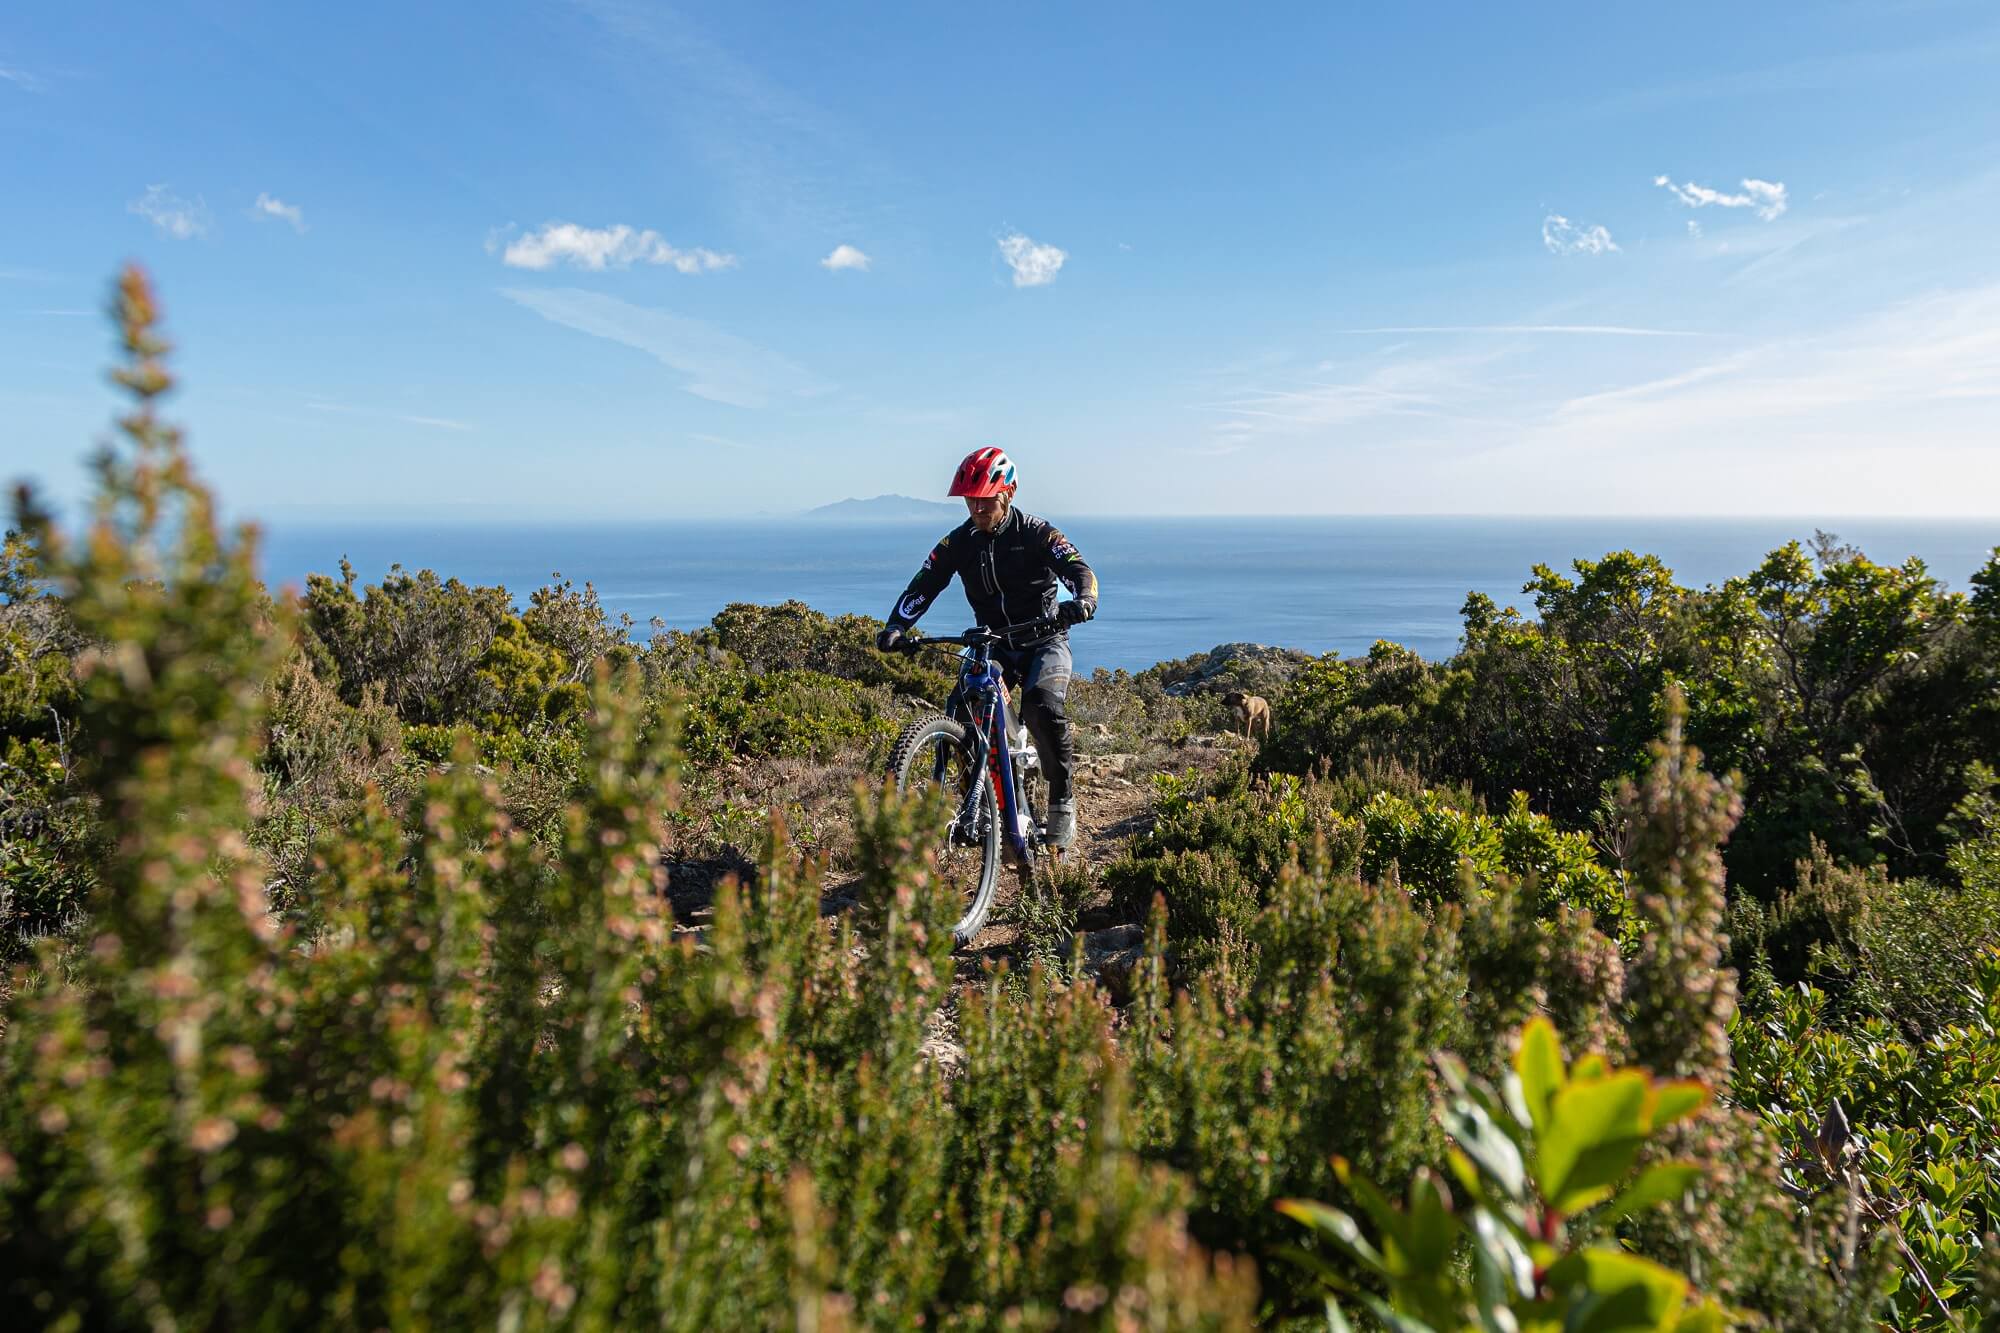 Photoshoot de Haibike Corsica, Xavier Marovelli sur un trail